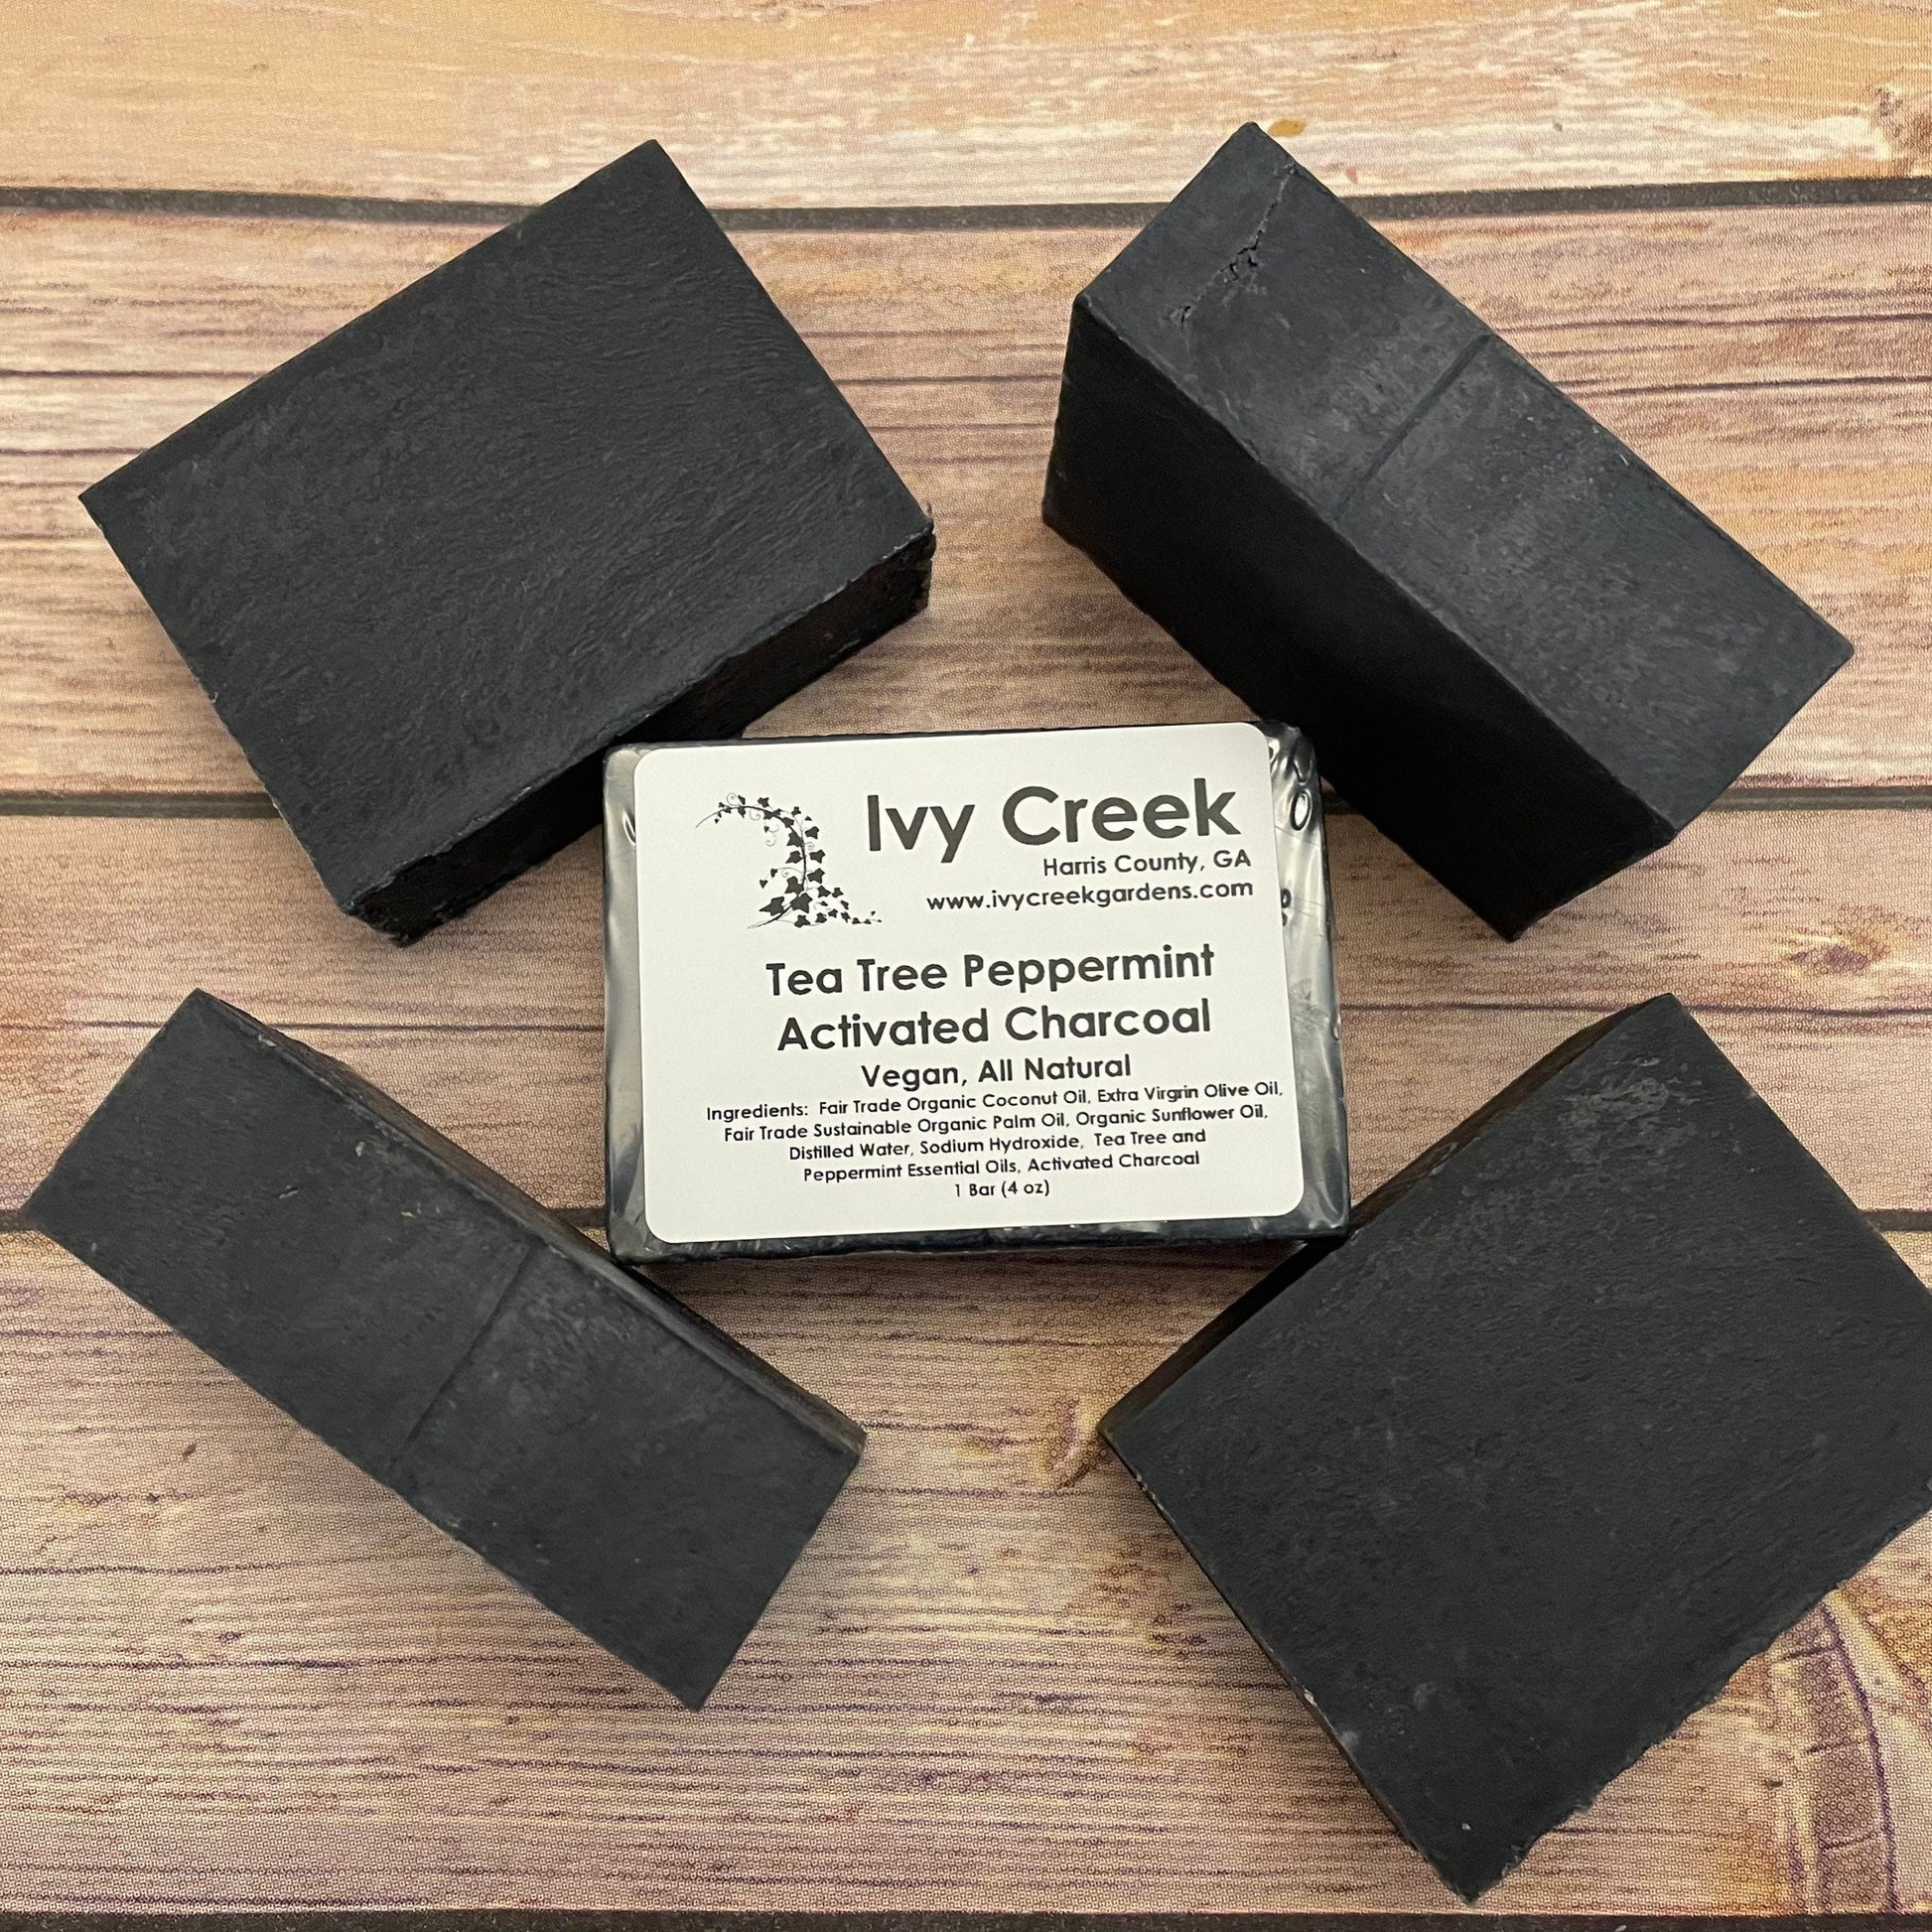 Ivy Creek Tea Tree Peppermint Activated Charcoal Soap | Vegan and Detoxifying Natural Soap - 4oz bar soap